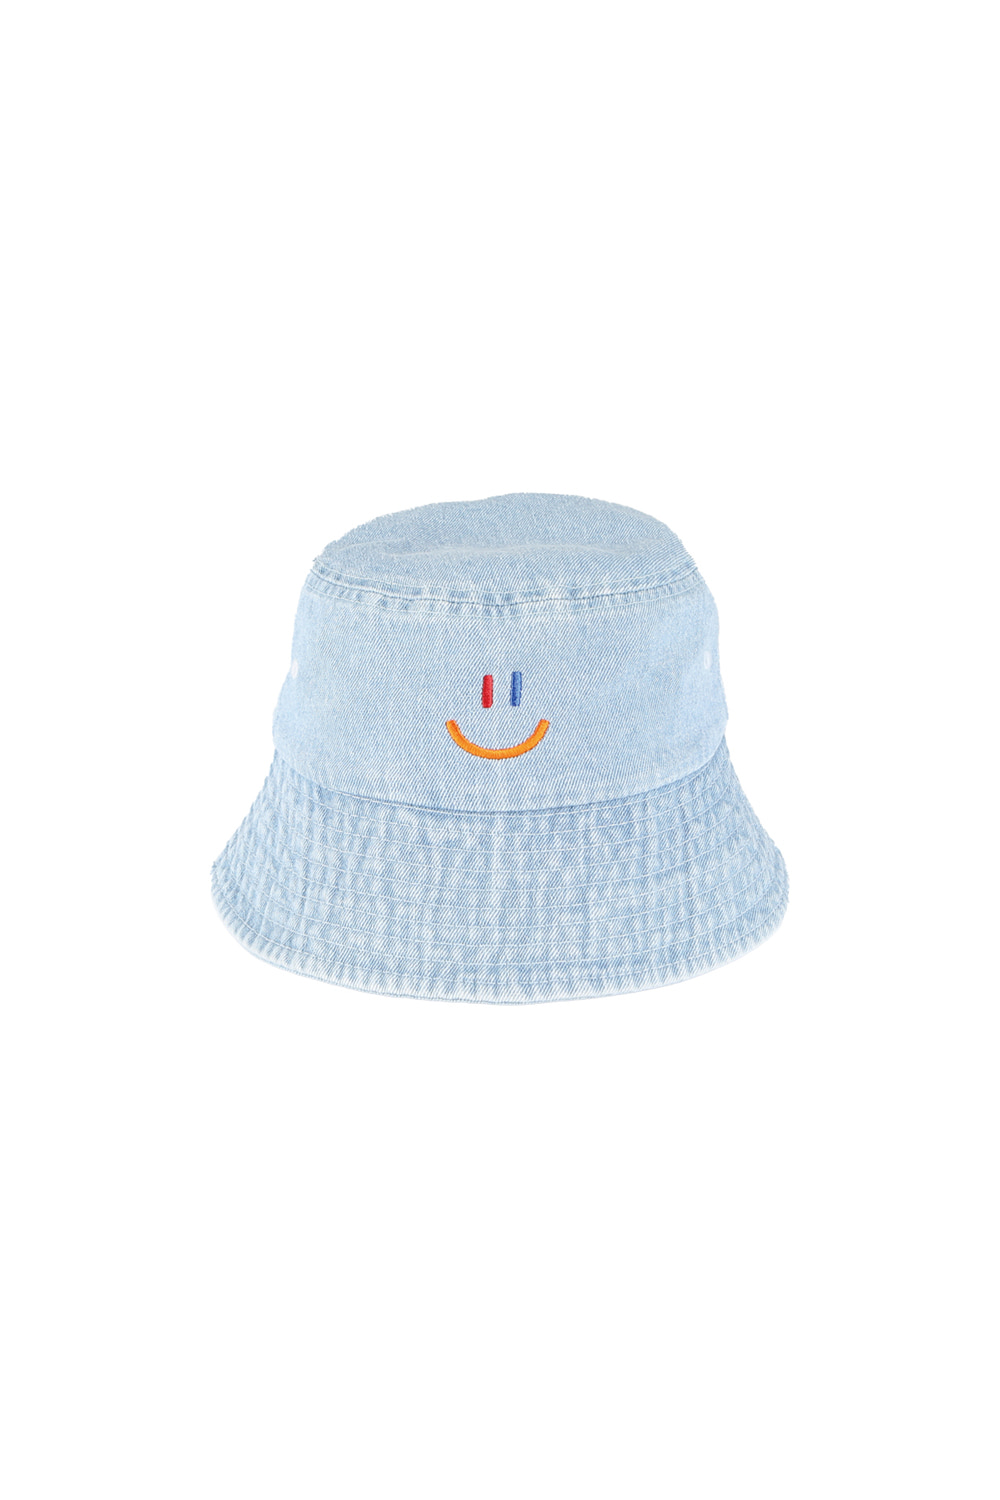 LaLa Denim Bucket Hat [Light Blue]